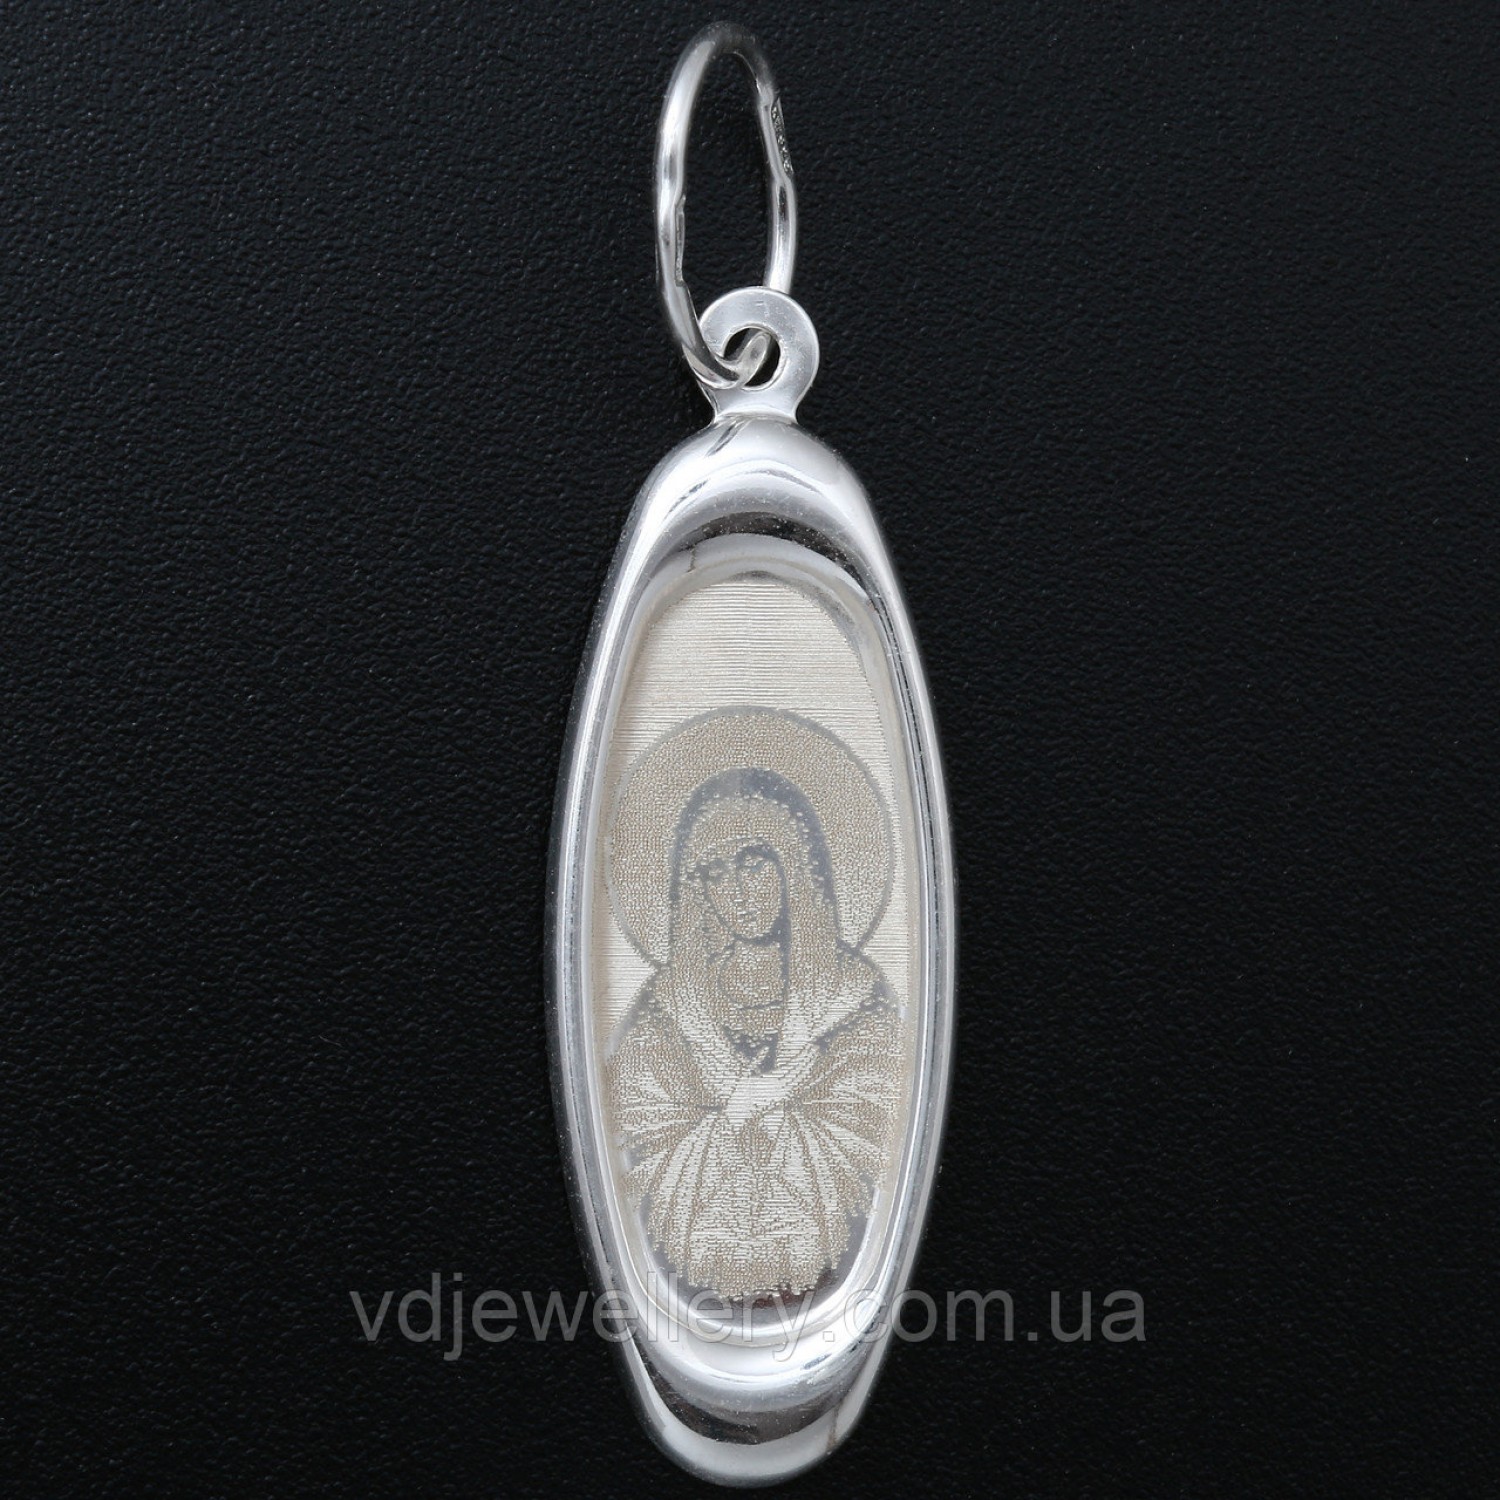 Серебряная ладанка "Божья Матерь" ВКХ-265